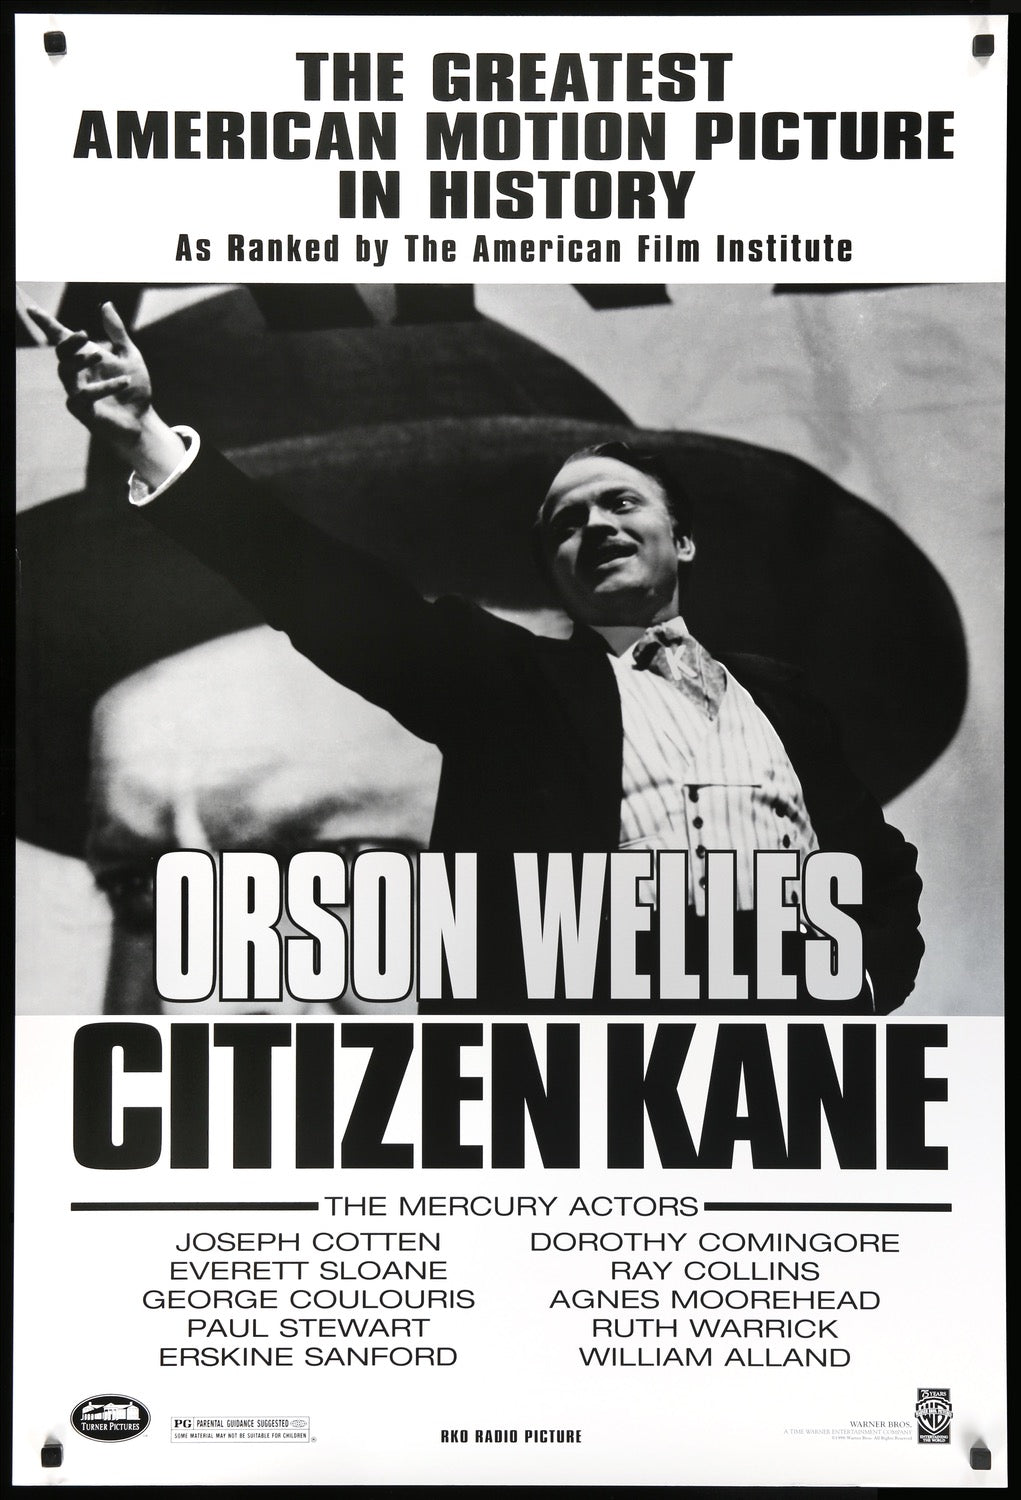 Citizen Kane (1941) original movie poster for sale at Original Film Art